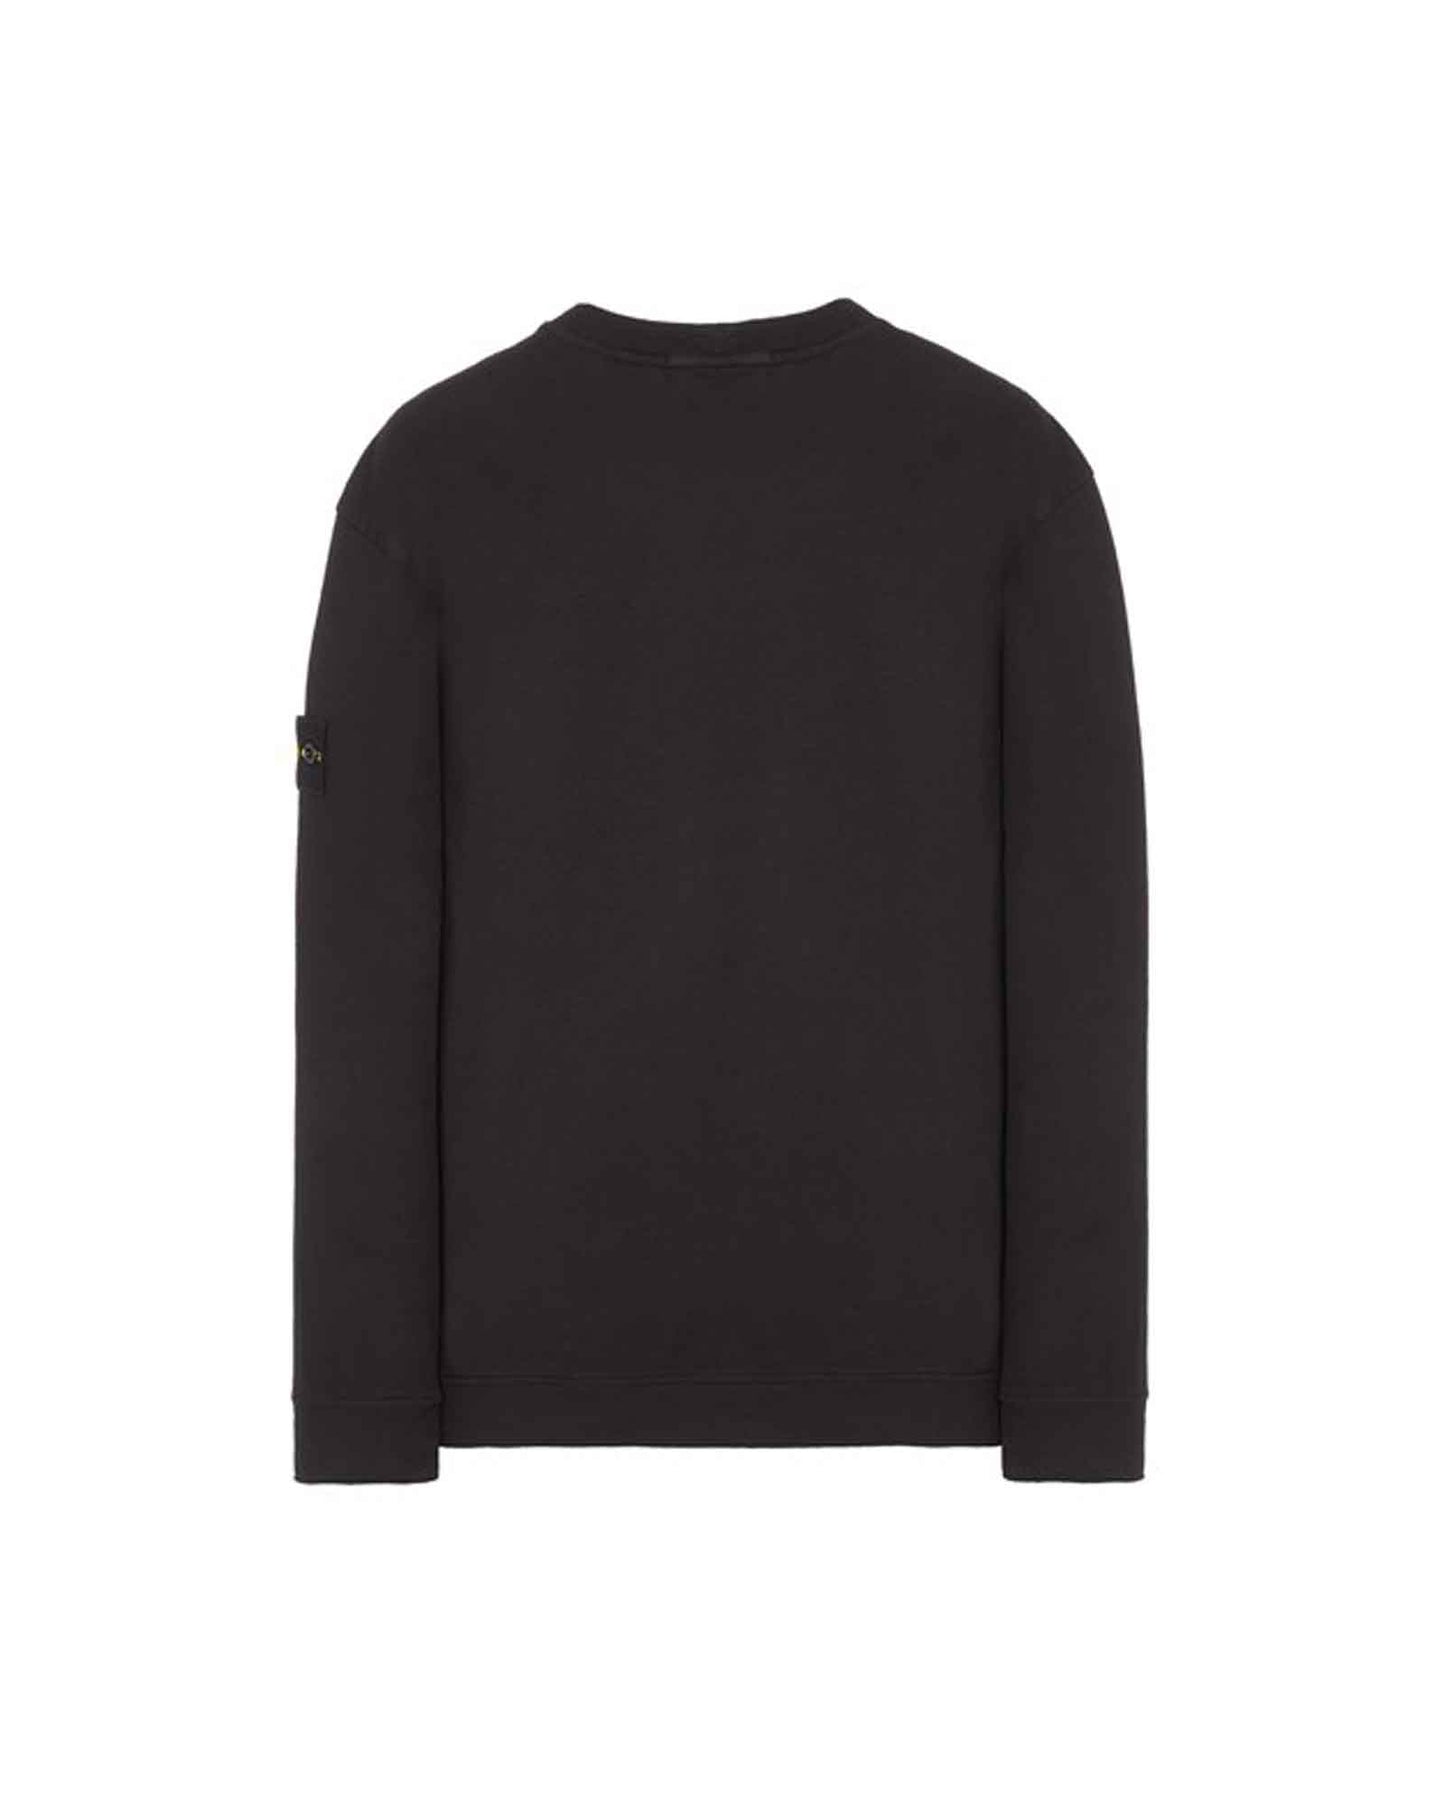 FELPA (Pullover sweatshirt) Black